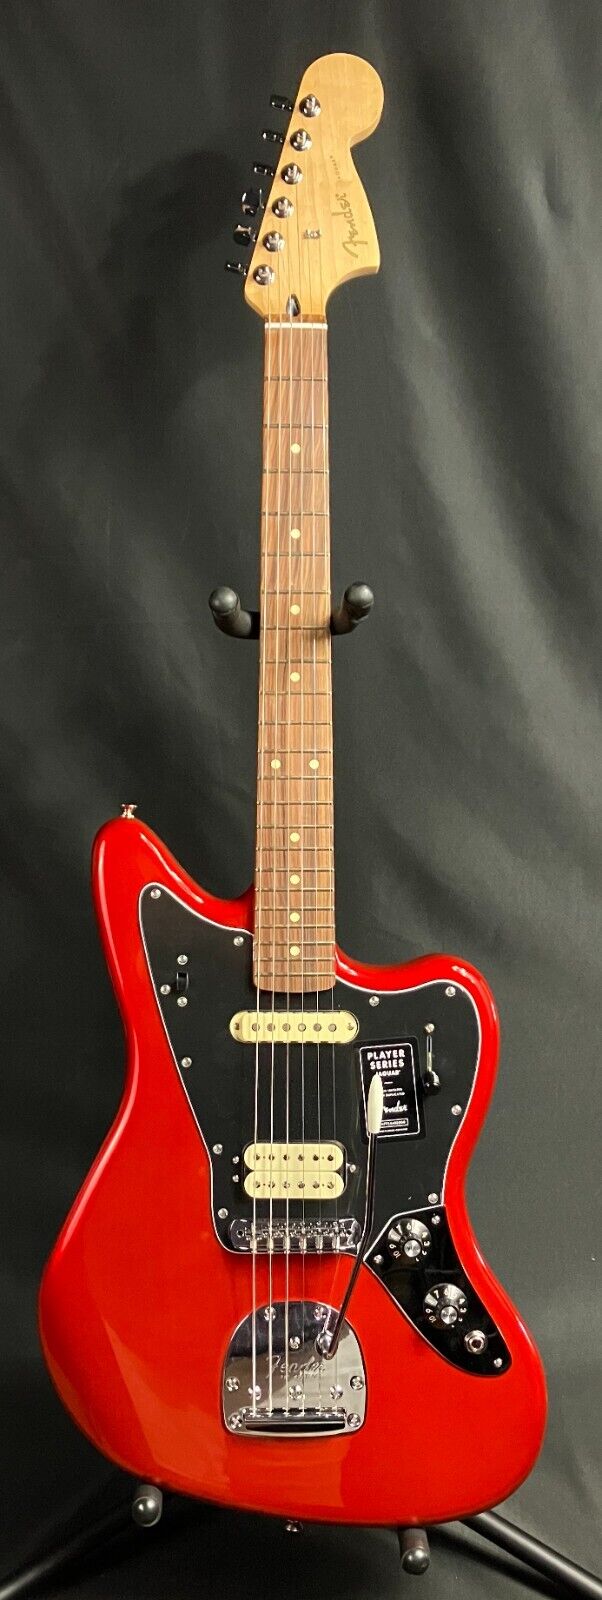 Fender Player Jaguar Electric Guitar Candy Apple Red Finish